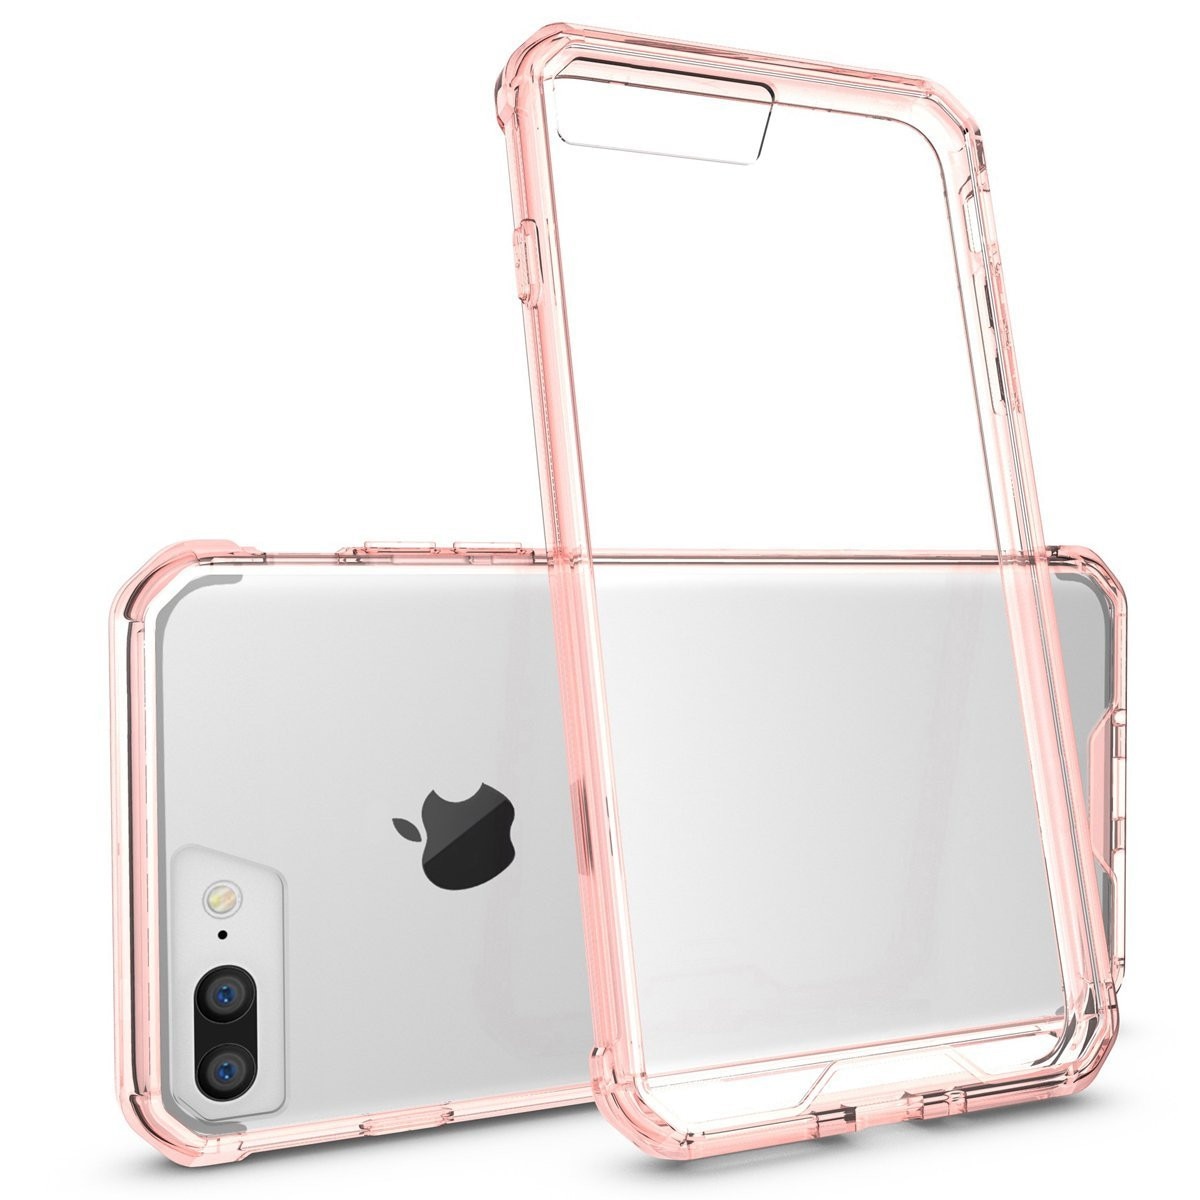 Incredible stay up Painstaking Husa iPhone 8 PLUS (+) / iPhone 7 PLUS (+), Hybrid Antisoc, carcasa spate  PC transparenta cu cadru, Rose-Gold - eMAG.ro